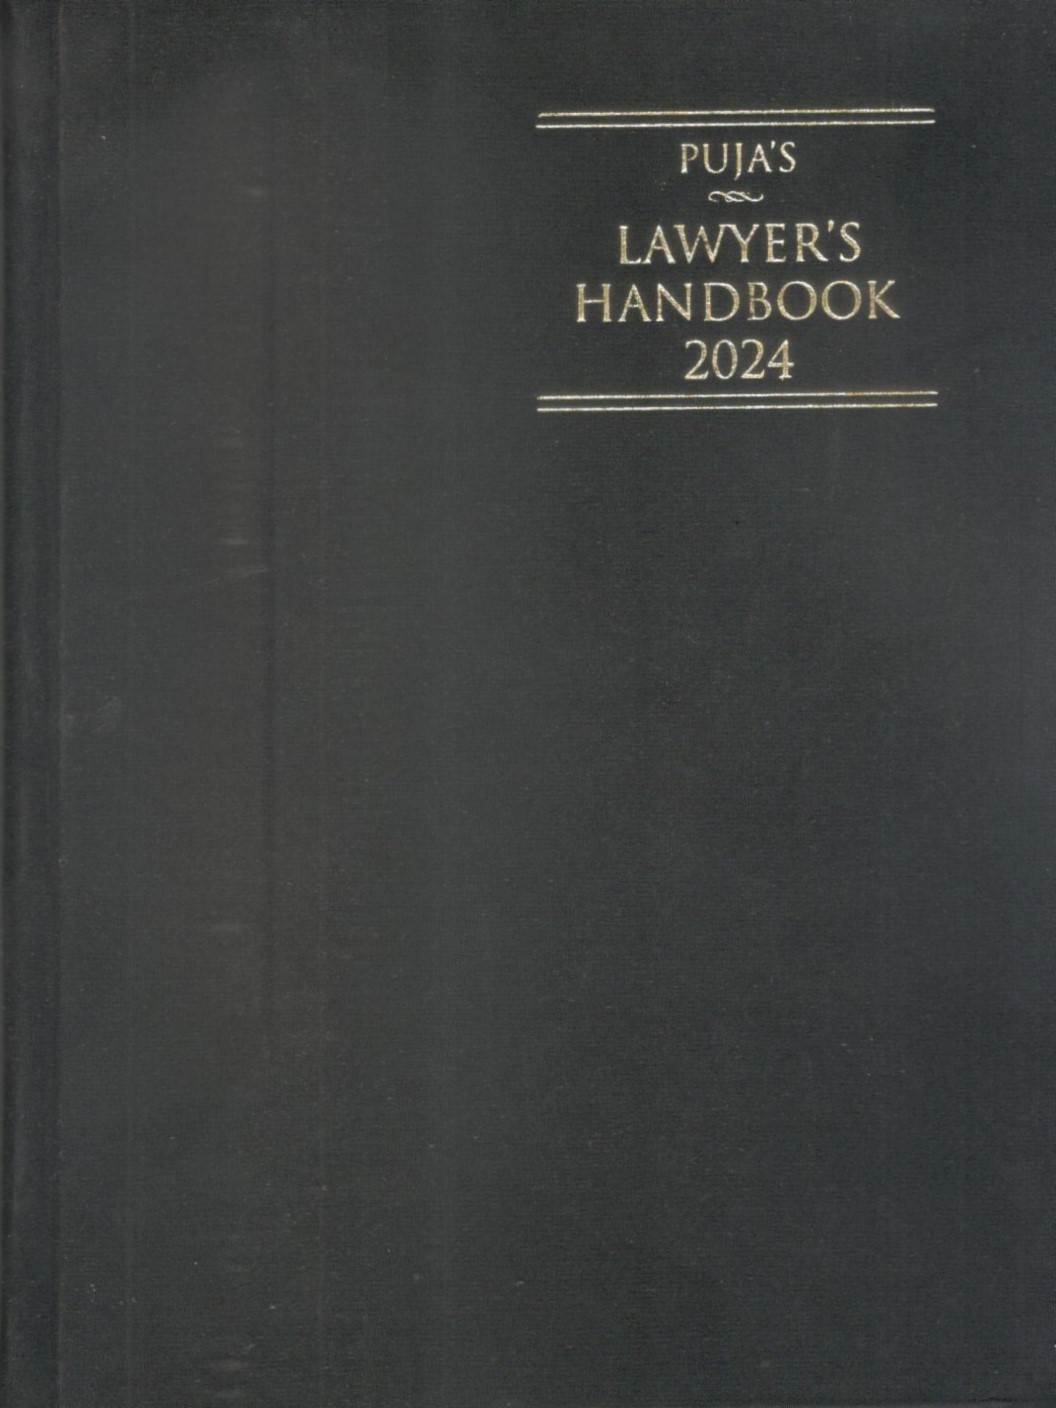  Buy Puja’s Lawyer’s Handbook 2024 - Black Big Size Hardbound